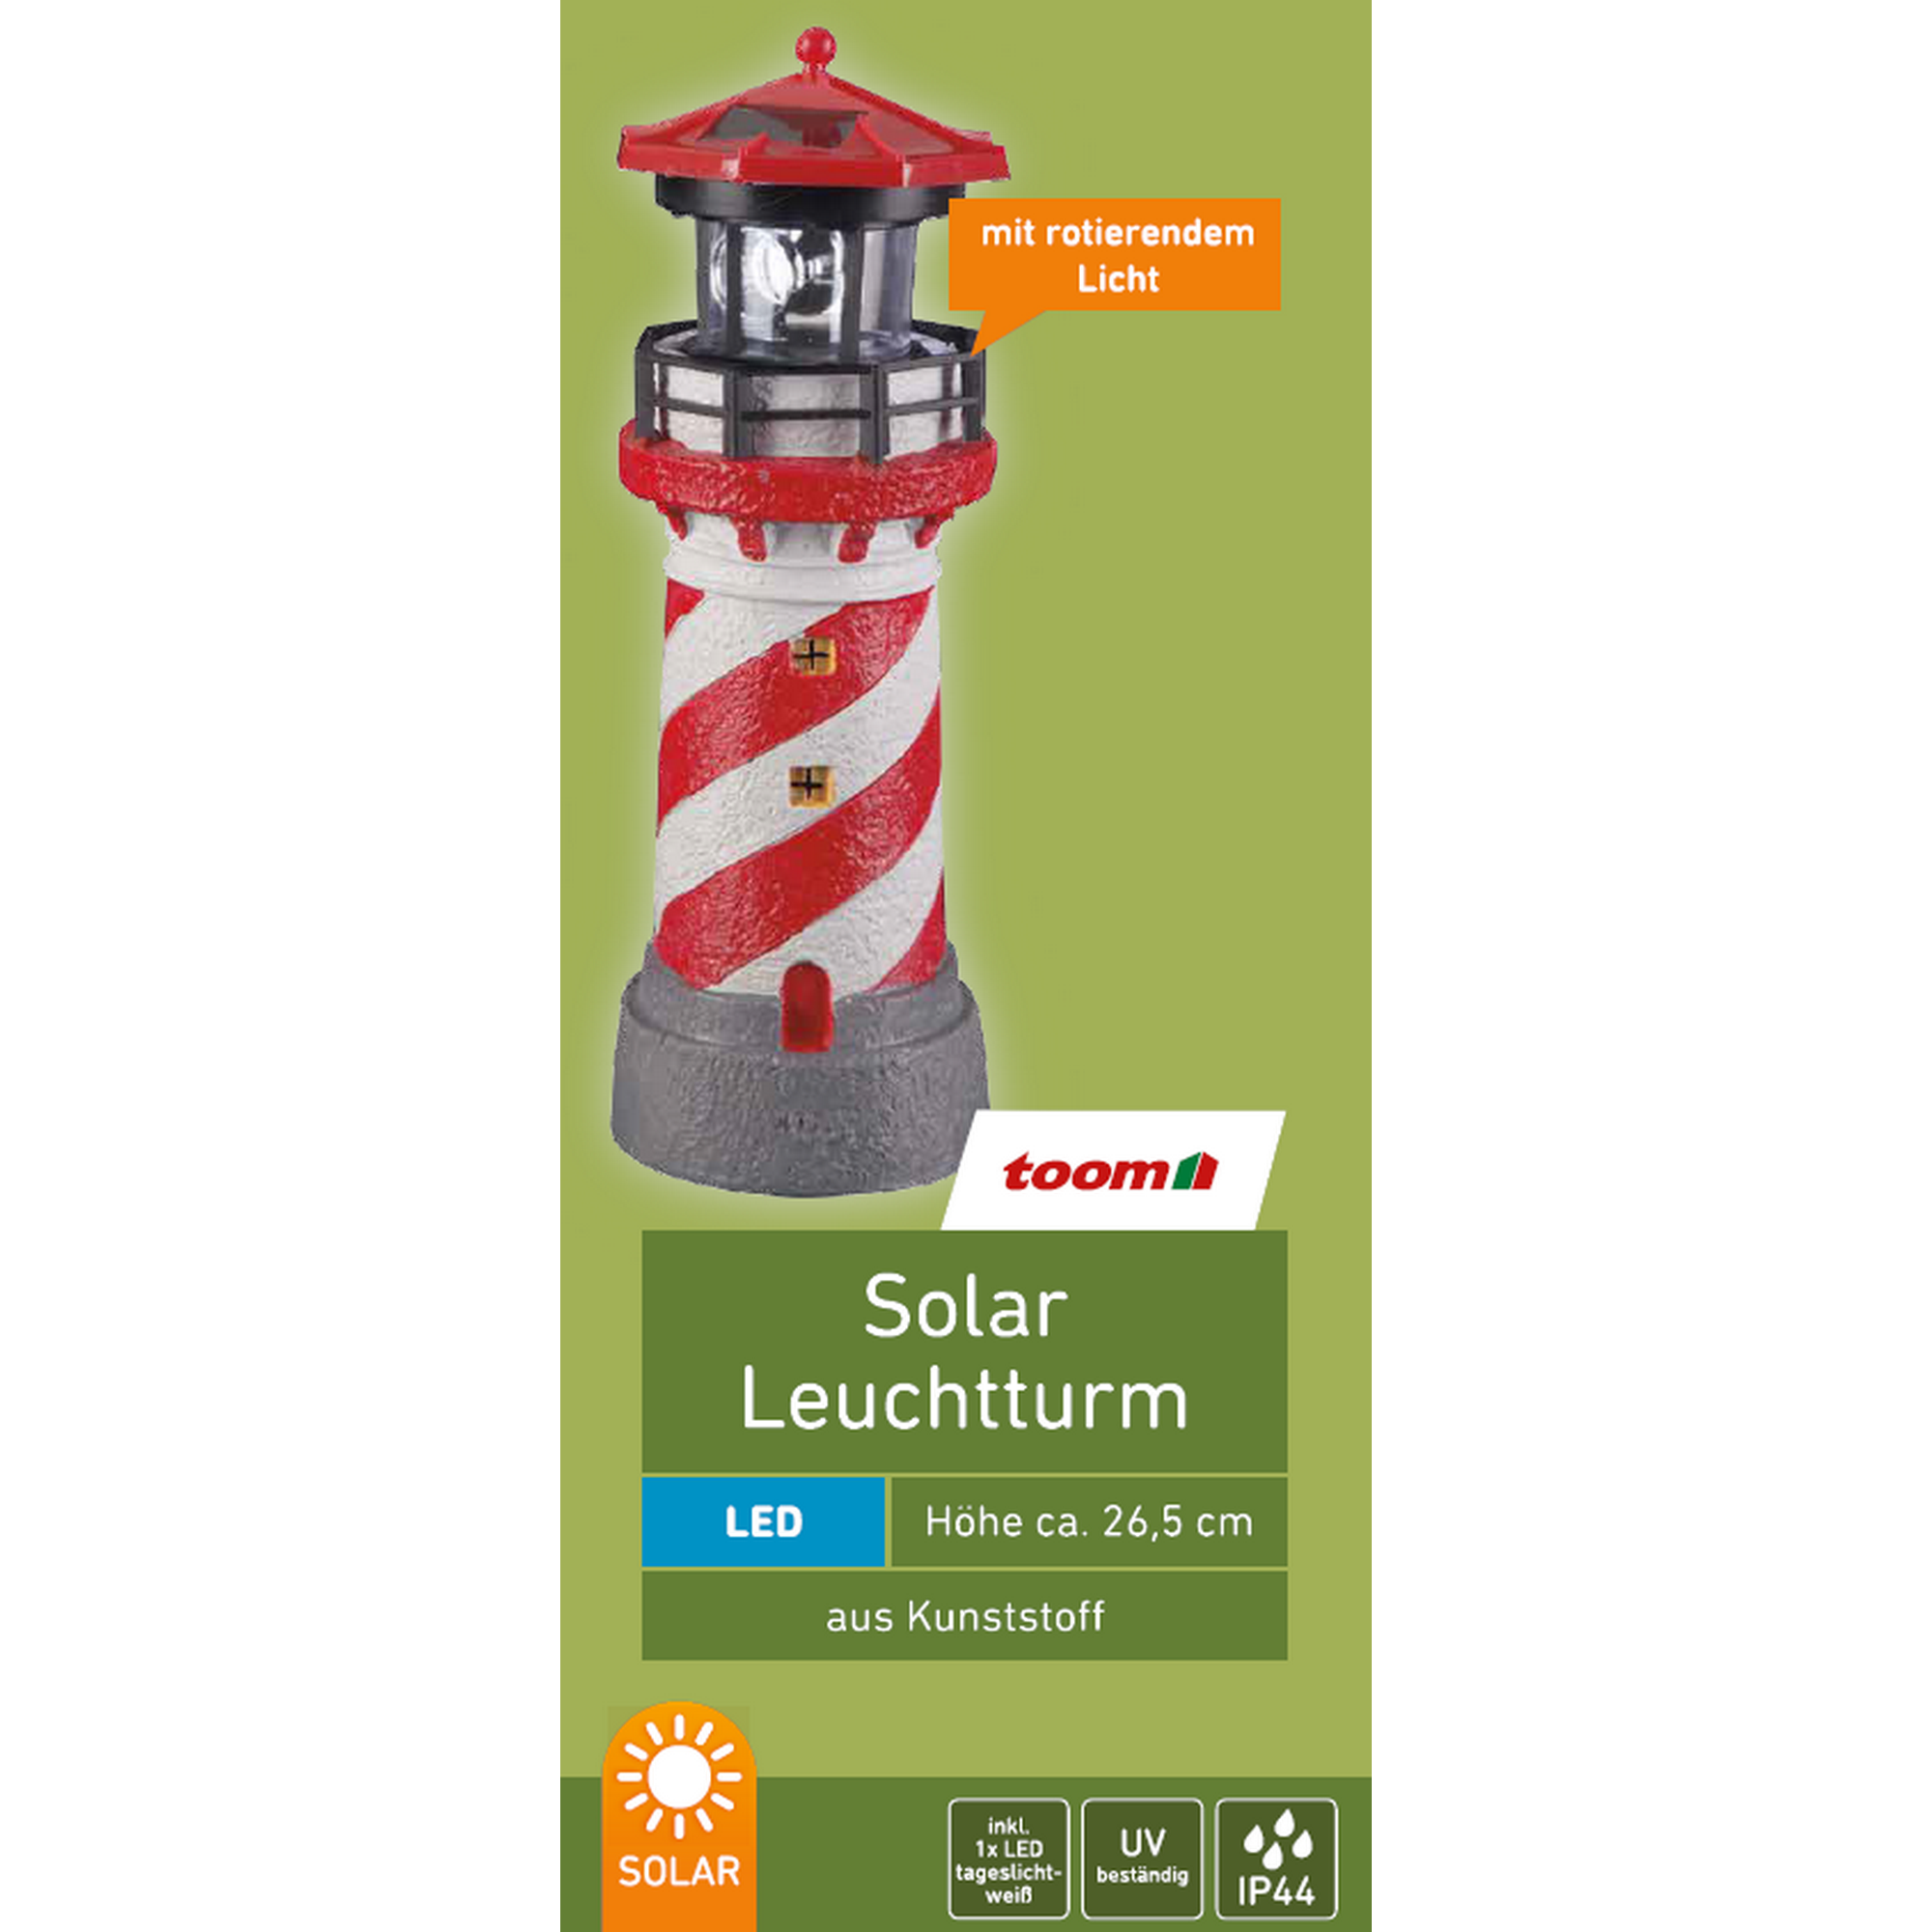 LED-Solarleuchte 'Leuchtturm' weiß/rot 26,5 cm + product picture